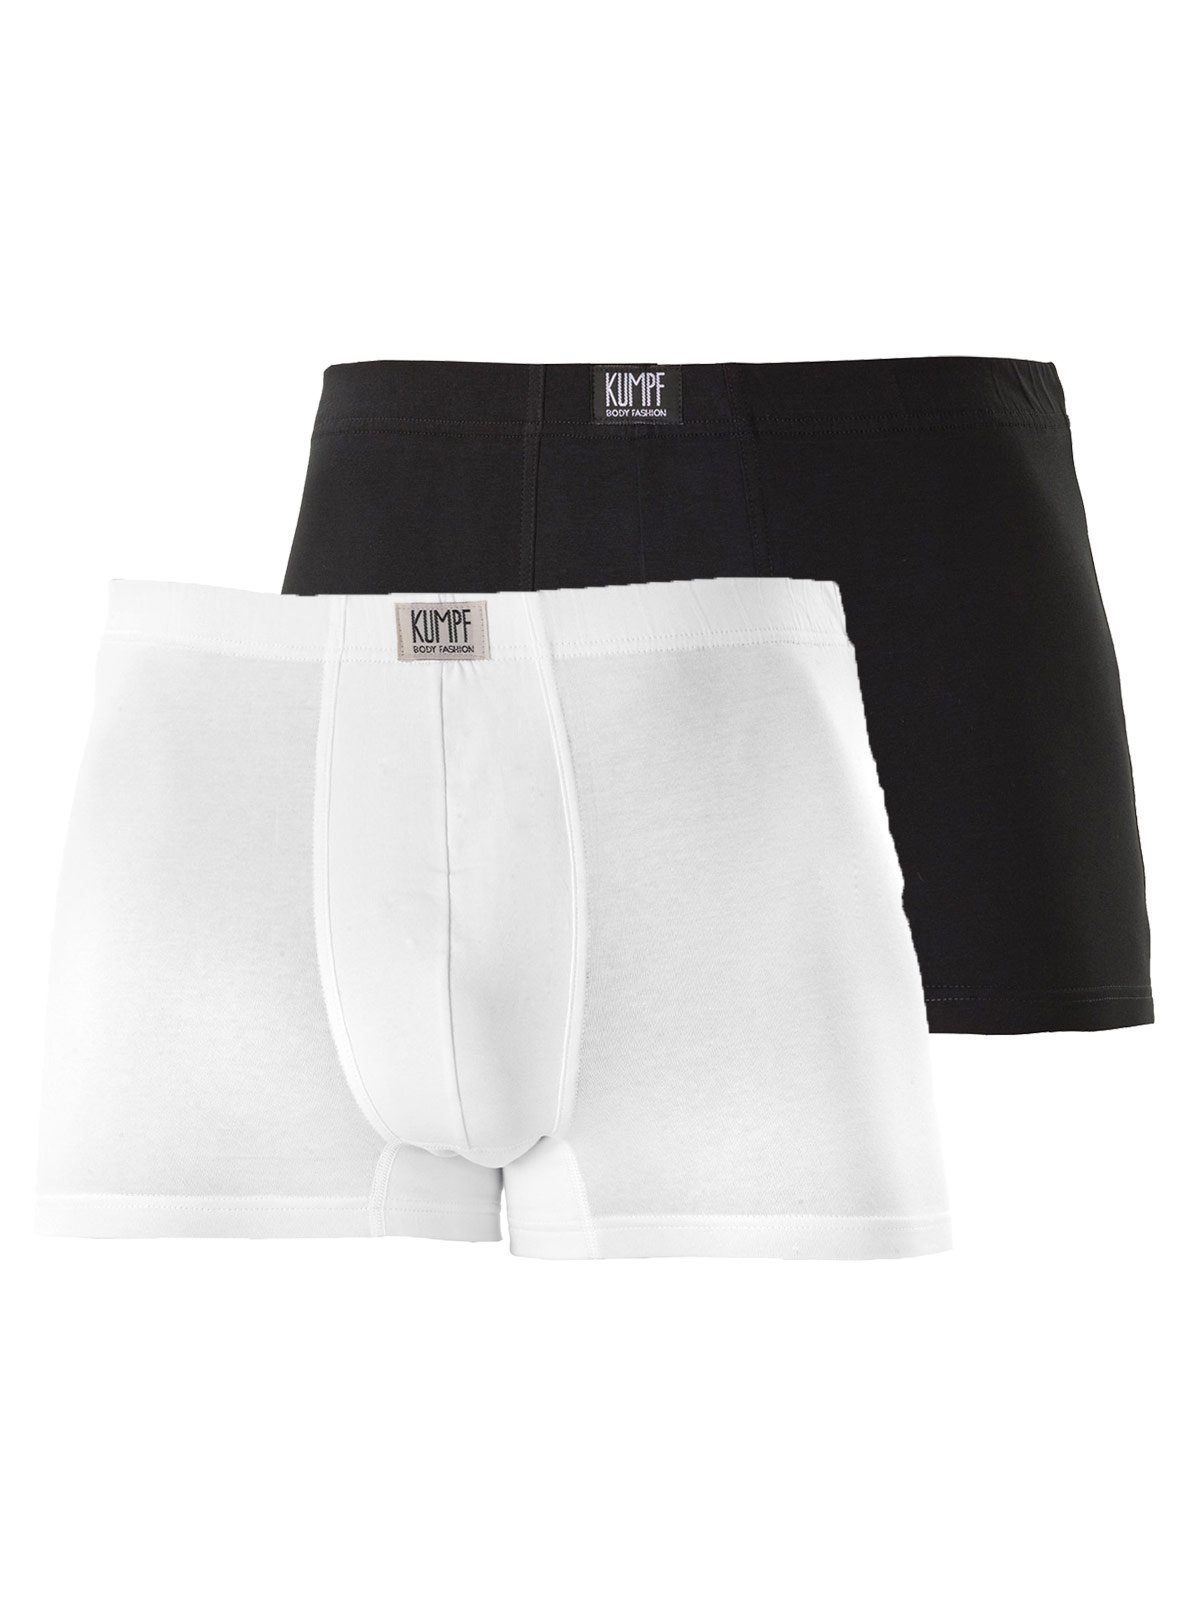 KUMPF Retro Pants 2er Sparpack Herren Pants Bio Cotton (Spar-Set, 2-St) hohe Markenqualität schwarz weiss